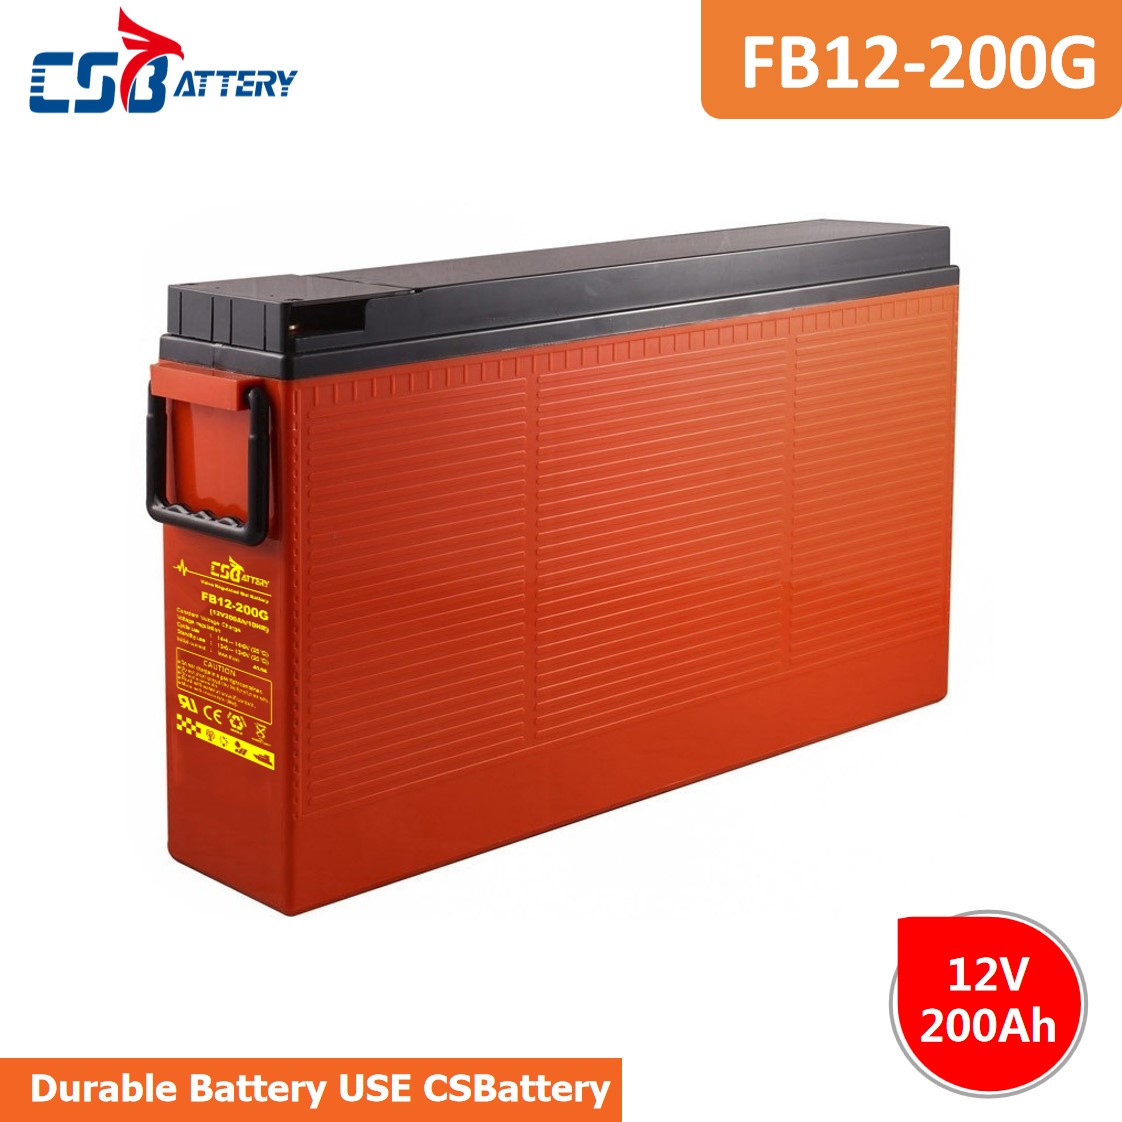 Csbattery 12V 200ah Front Access VRLA Battery for Solar